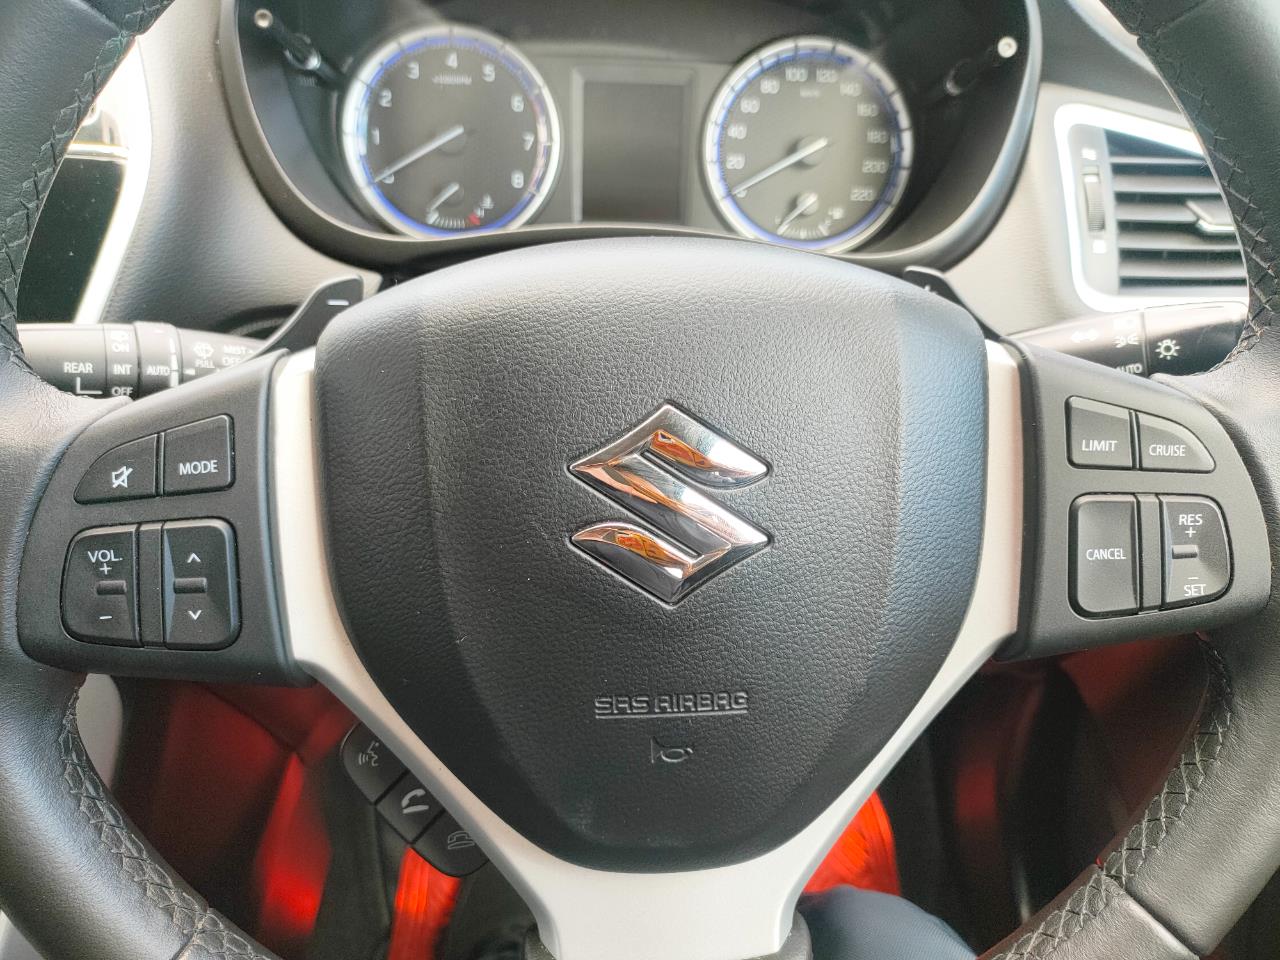 2019 Suzuki S-Cross image 9